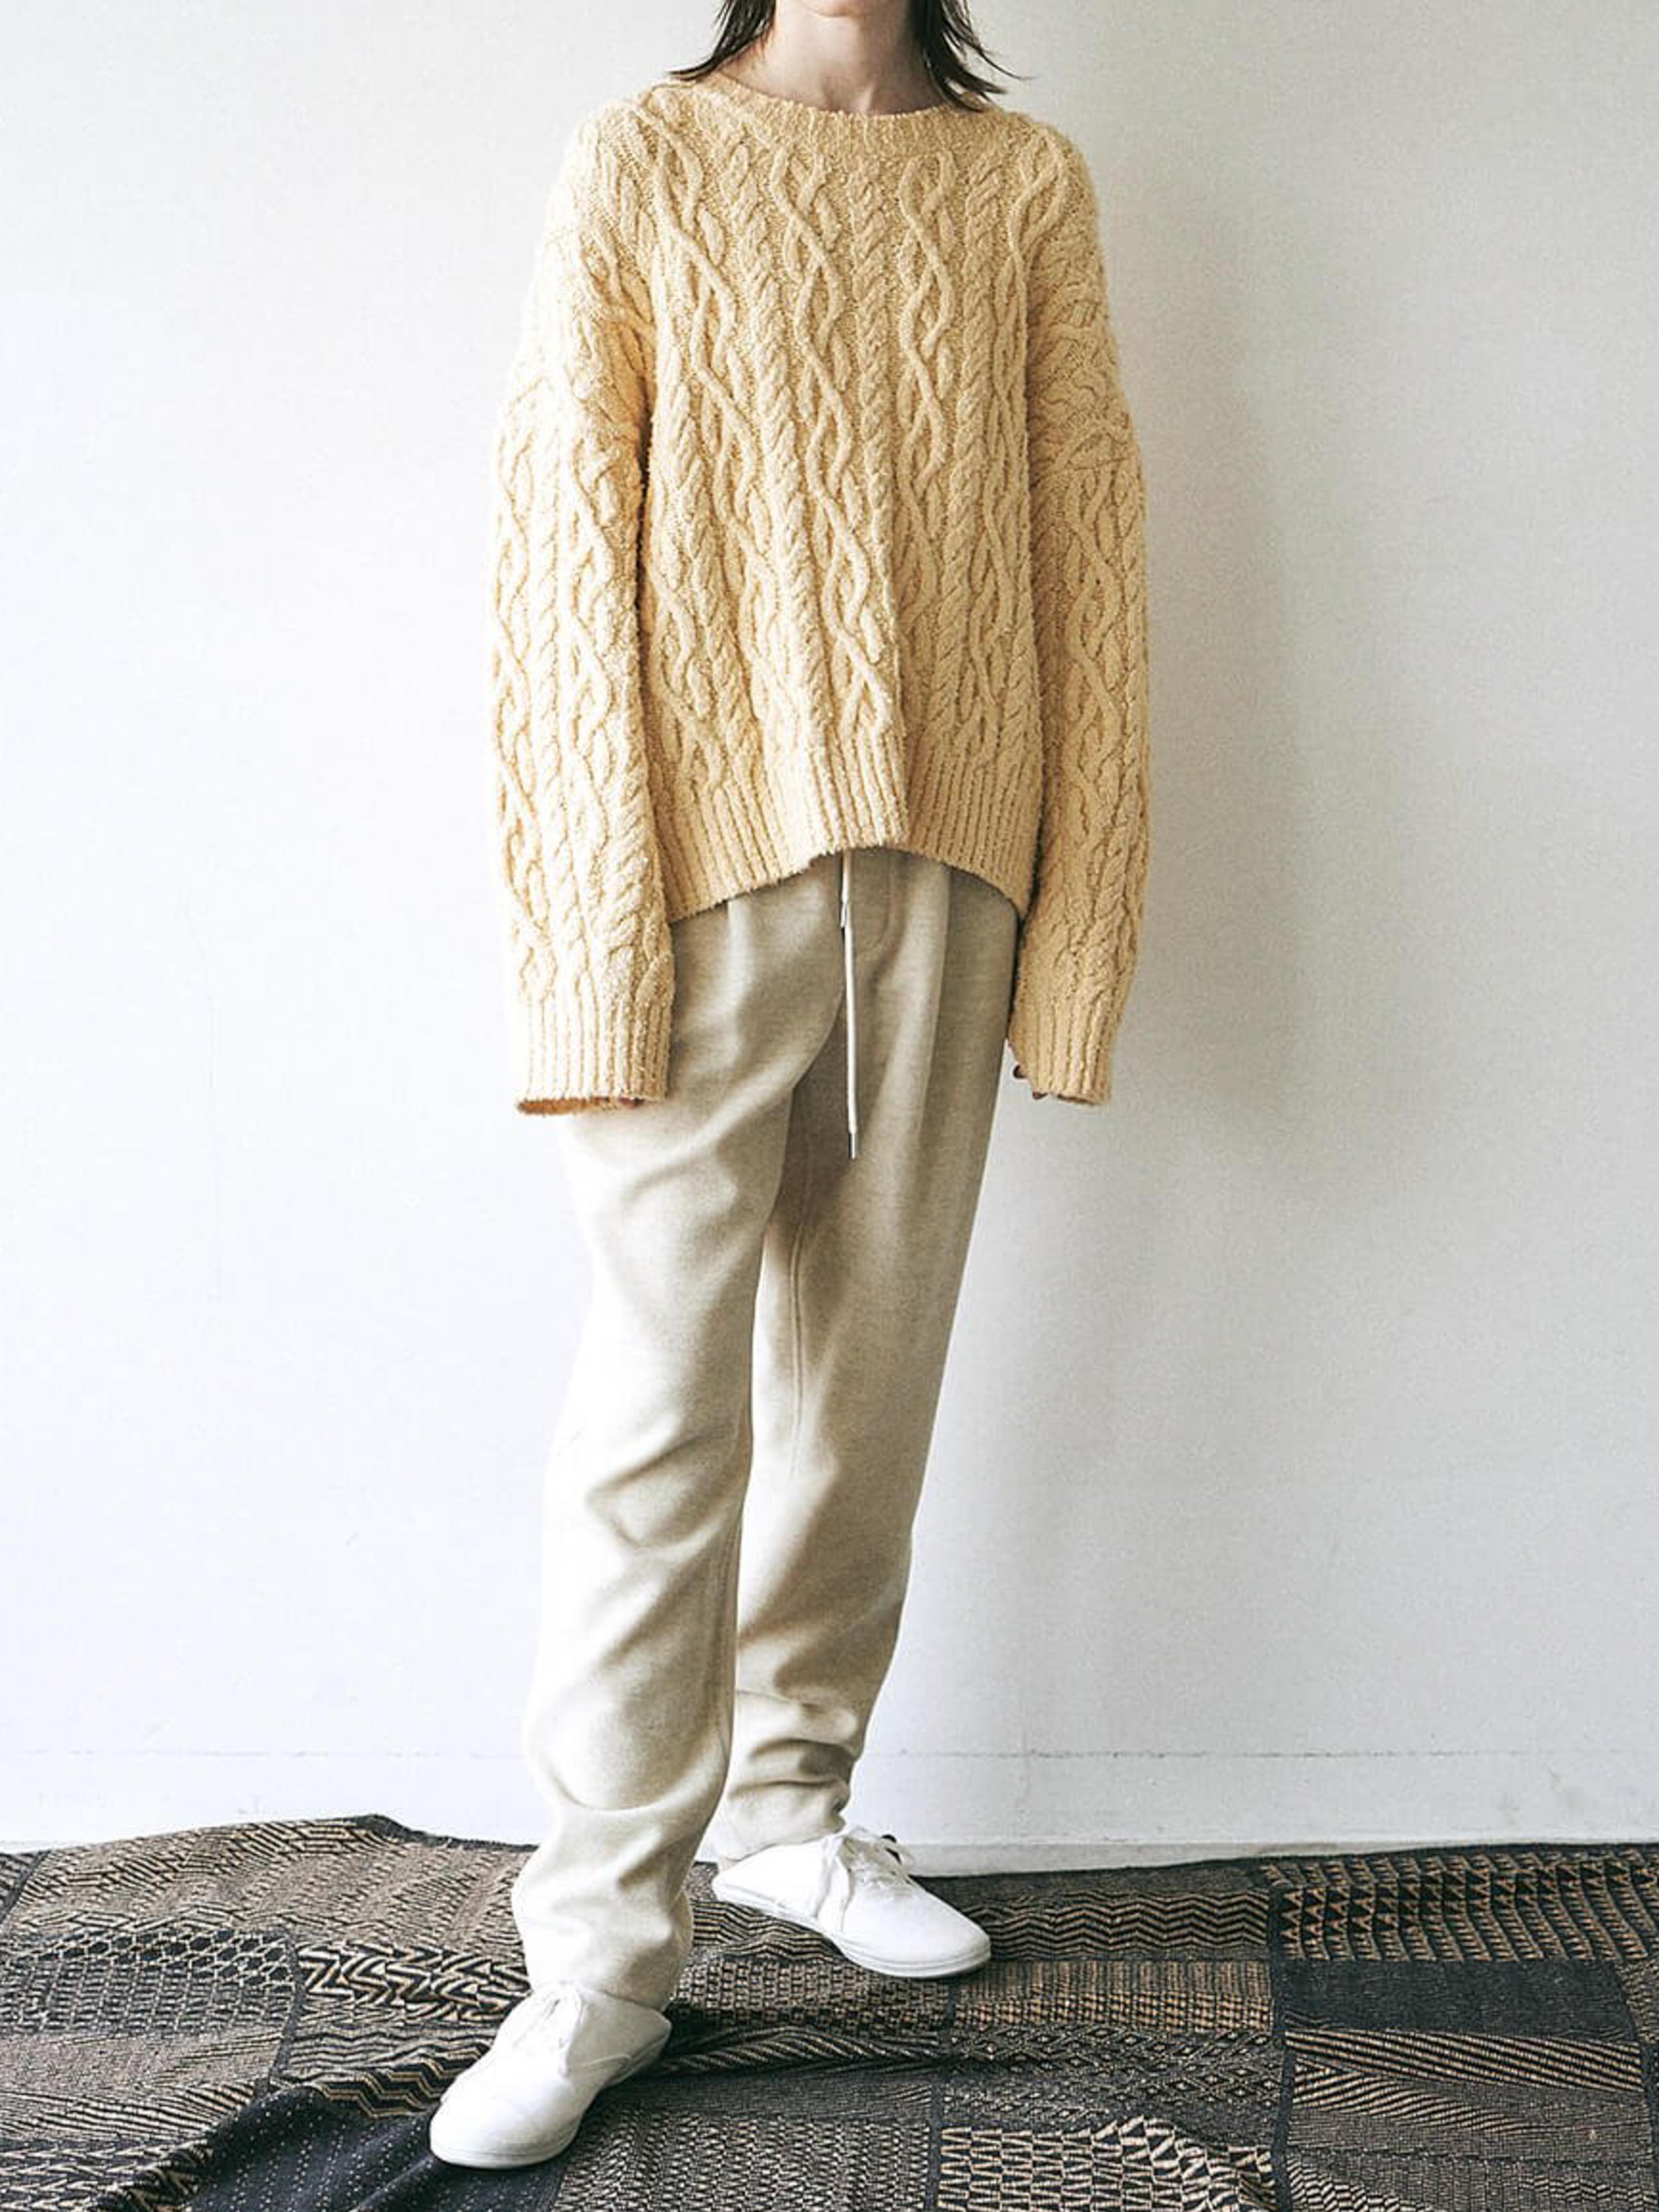 Namu Shop - Unfil French Merino Cotton Boucle Cable Knit Sweater